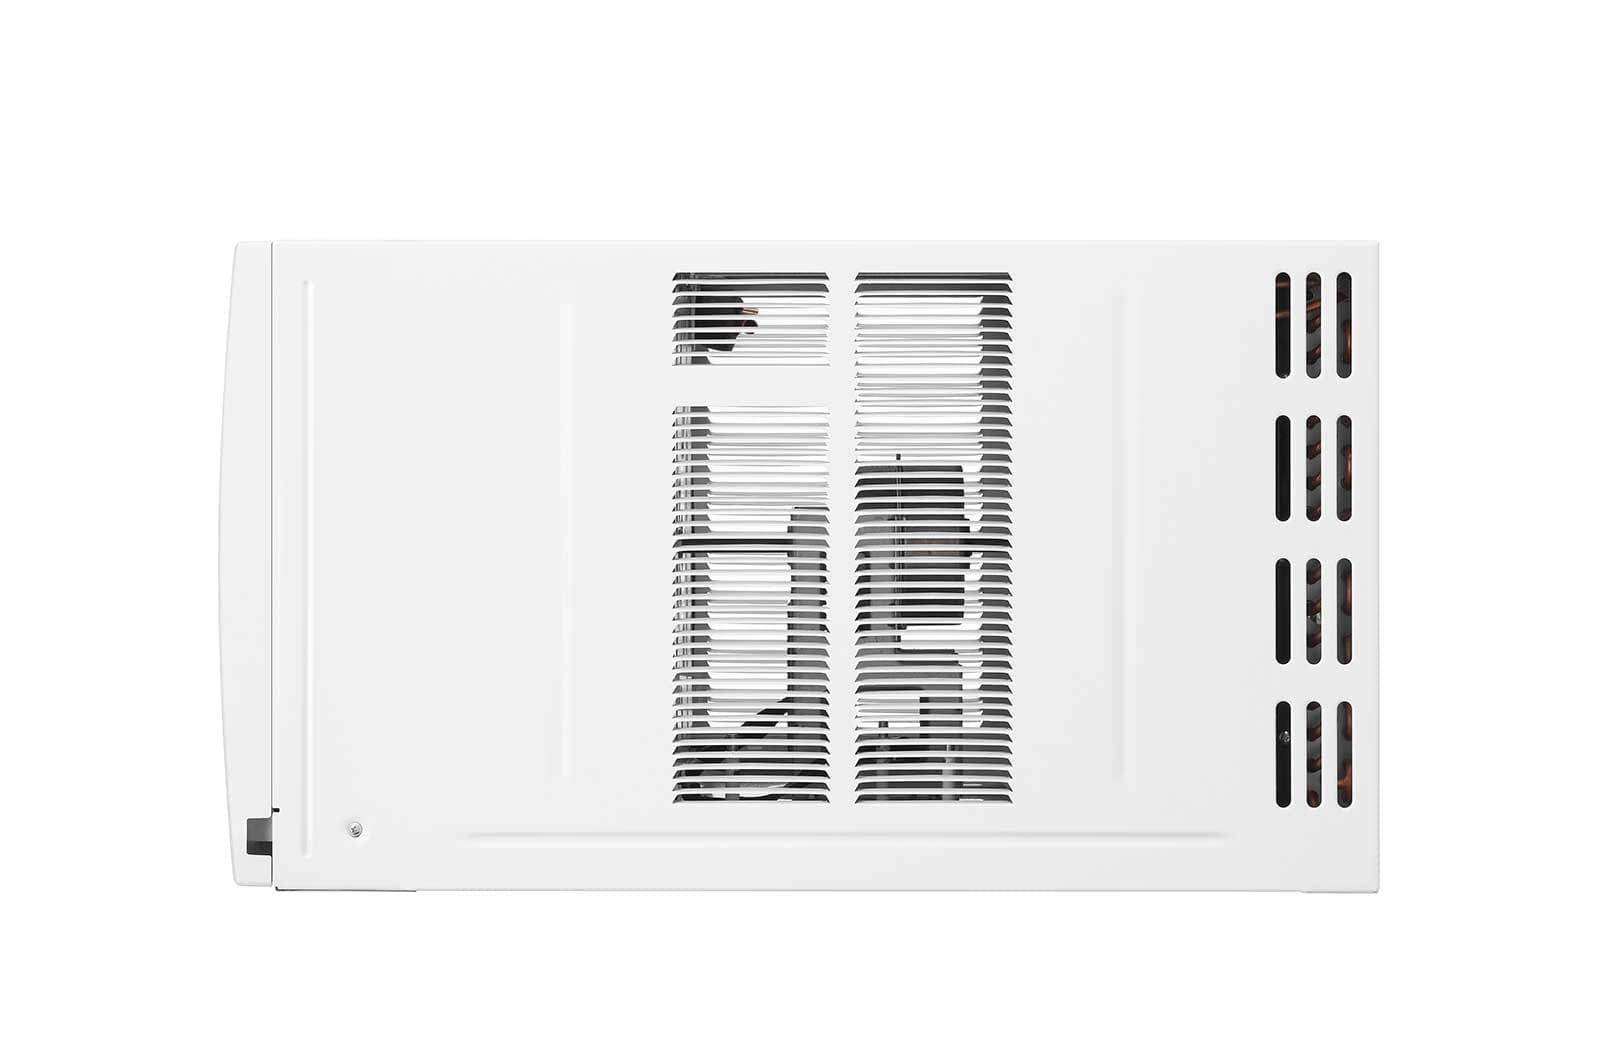 LG Window Heat/Cool LG 18,000 BTU 230V Window-Mounted Air Conditioner with 12,000 BTU Supplemental Heat Function